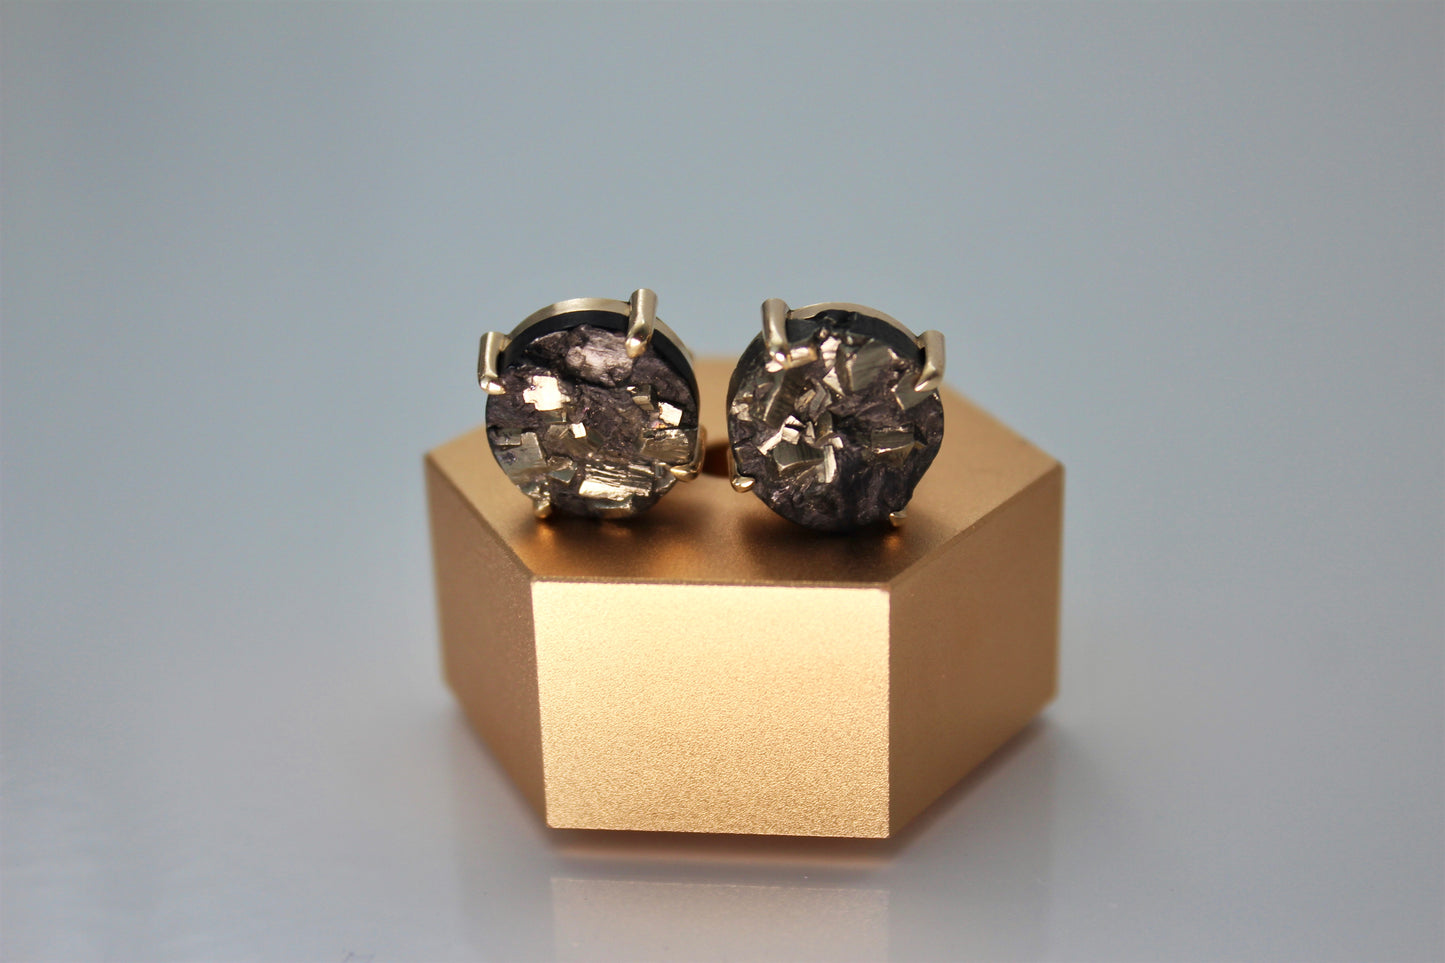 Pyrite-in-Slate Stud Earrings